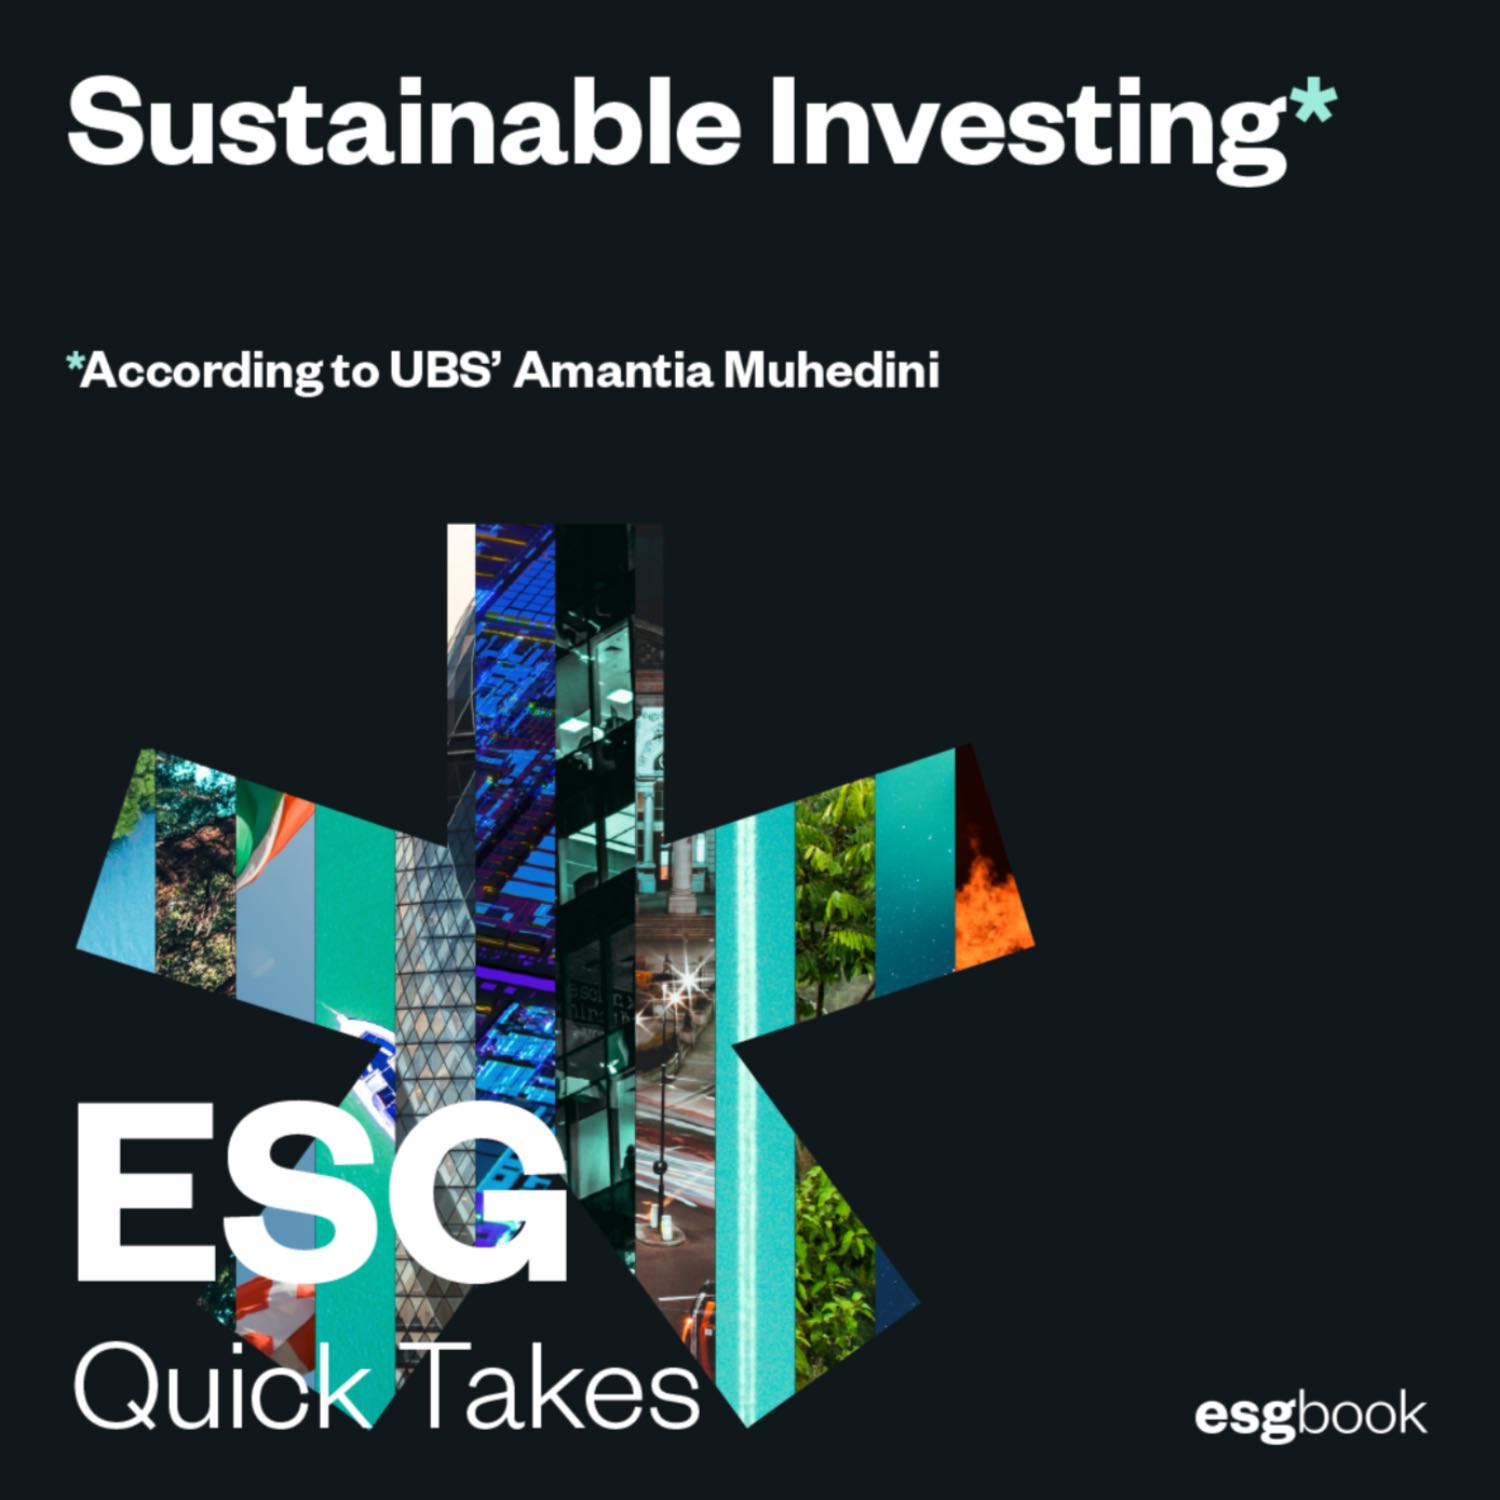 Sustainable investing: According to UBS’ Amantia Muhedini